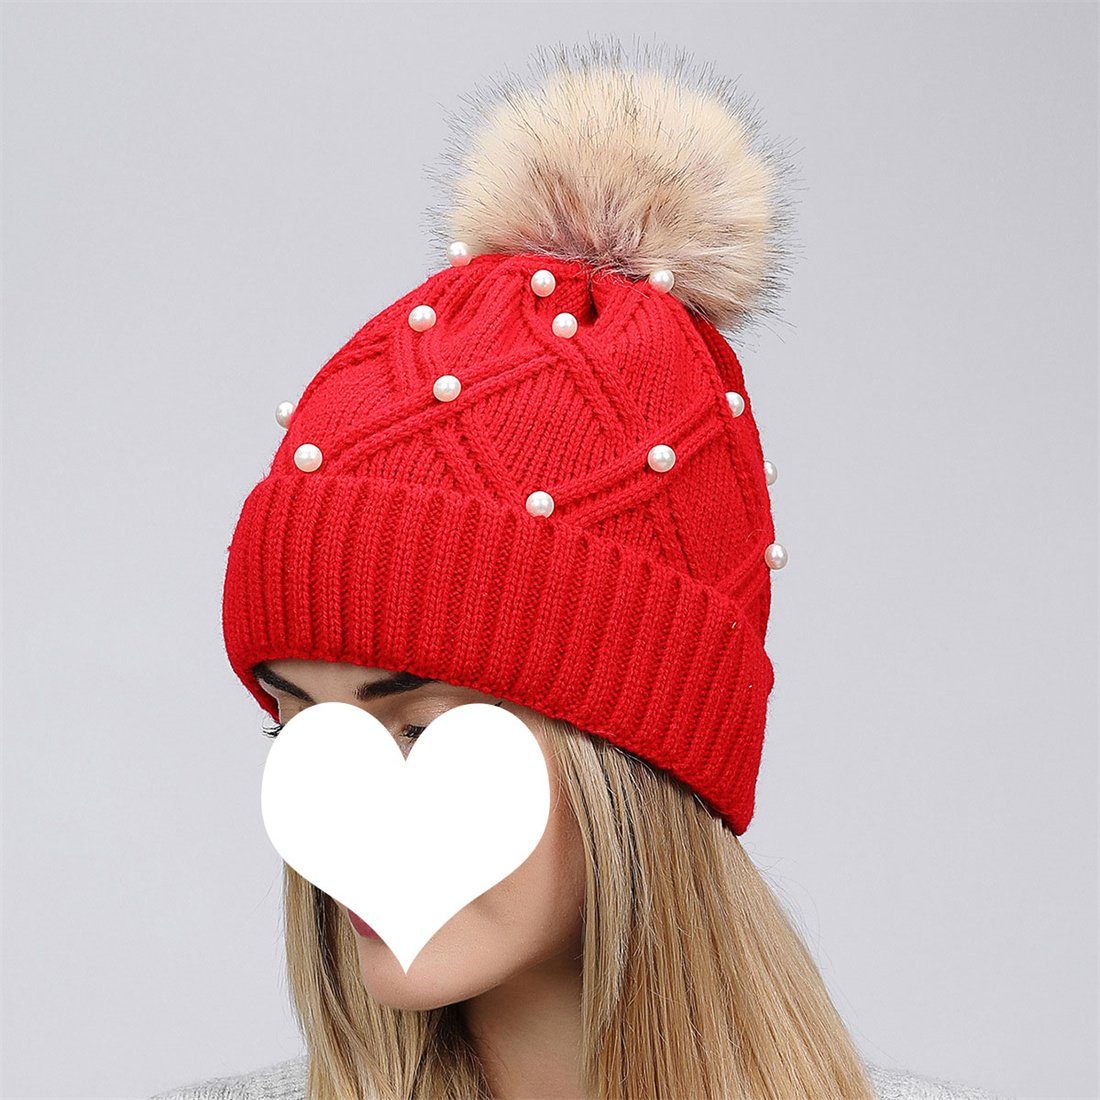 DÖRÖY Strickmütze Women's Fashion Hairball Knitted Cap, Winter Thickened Warm Woolen Cap Rot